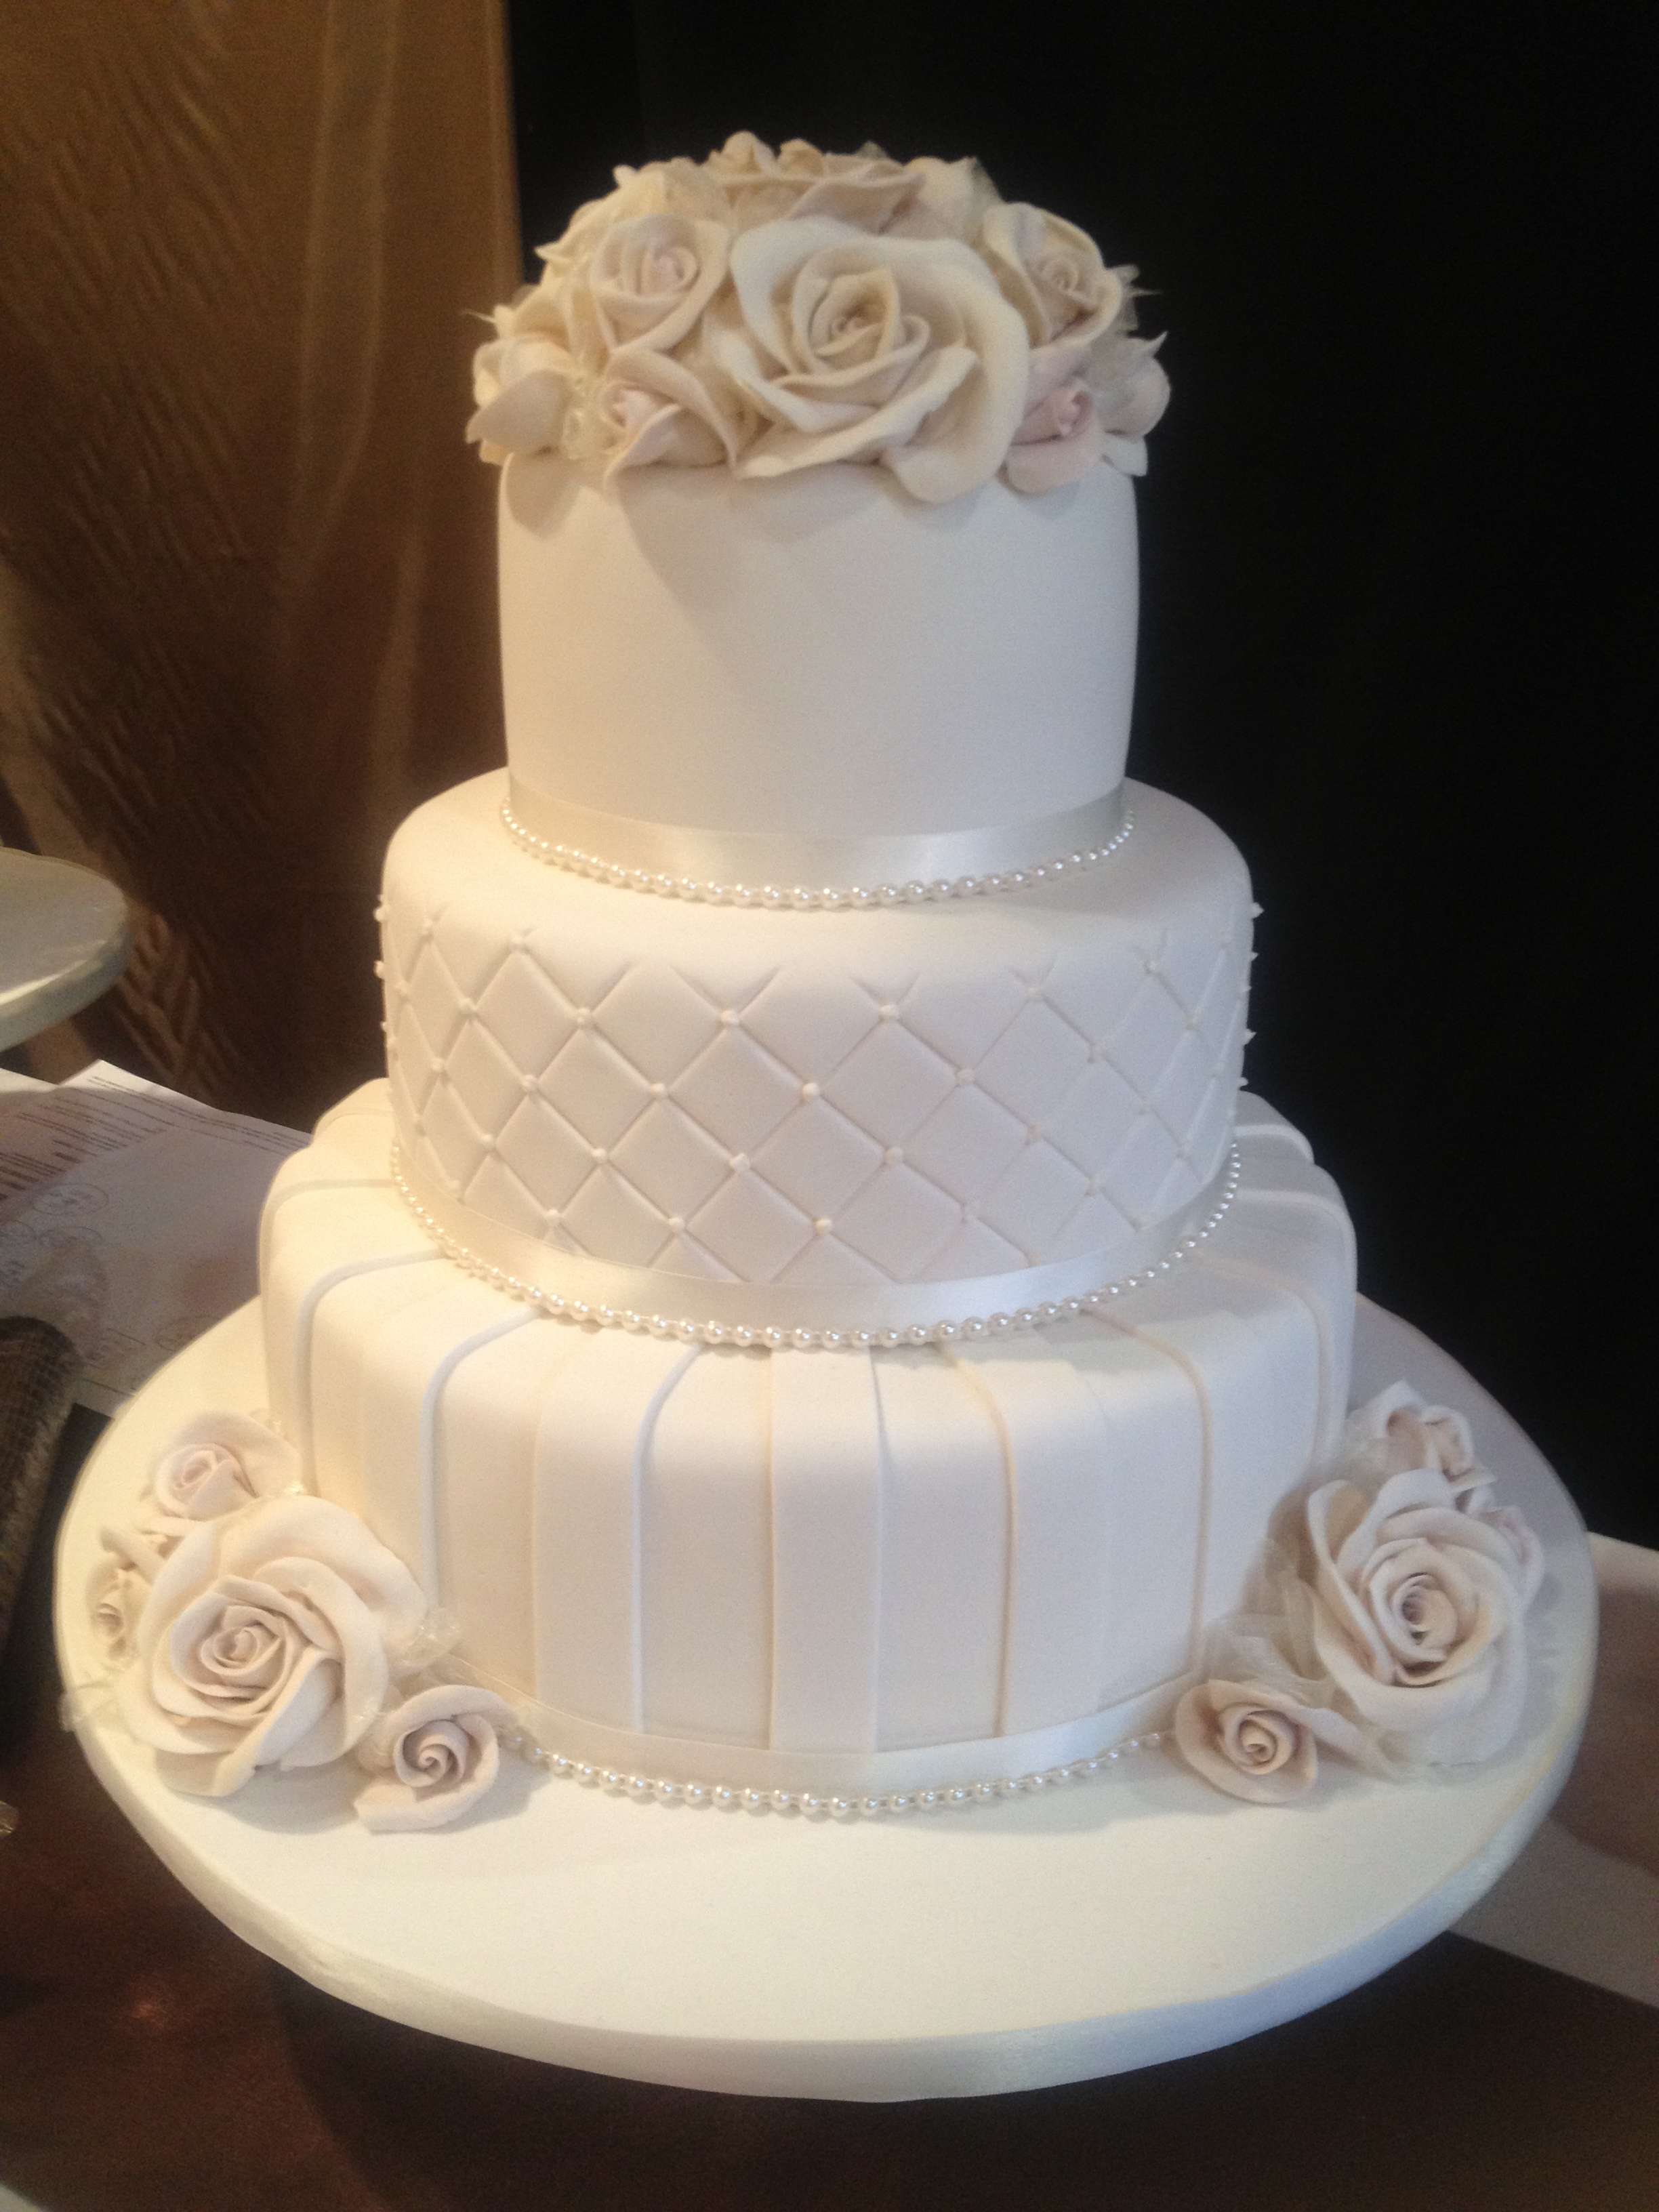 Gallery of wedding cake designs